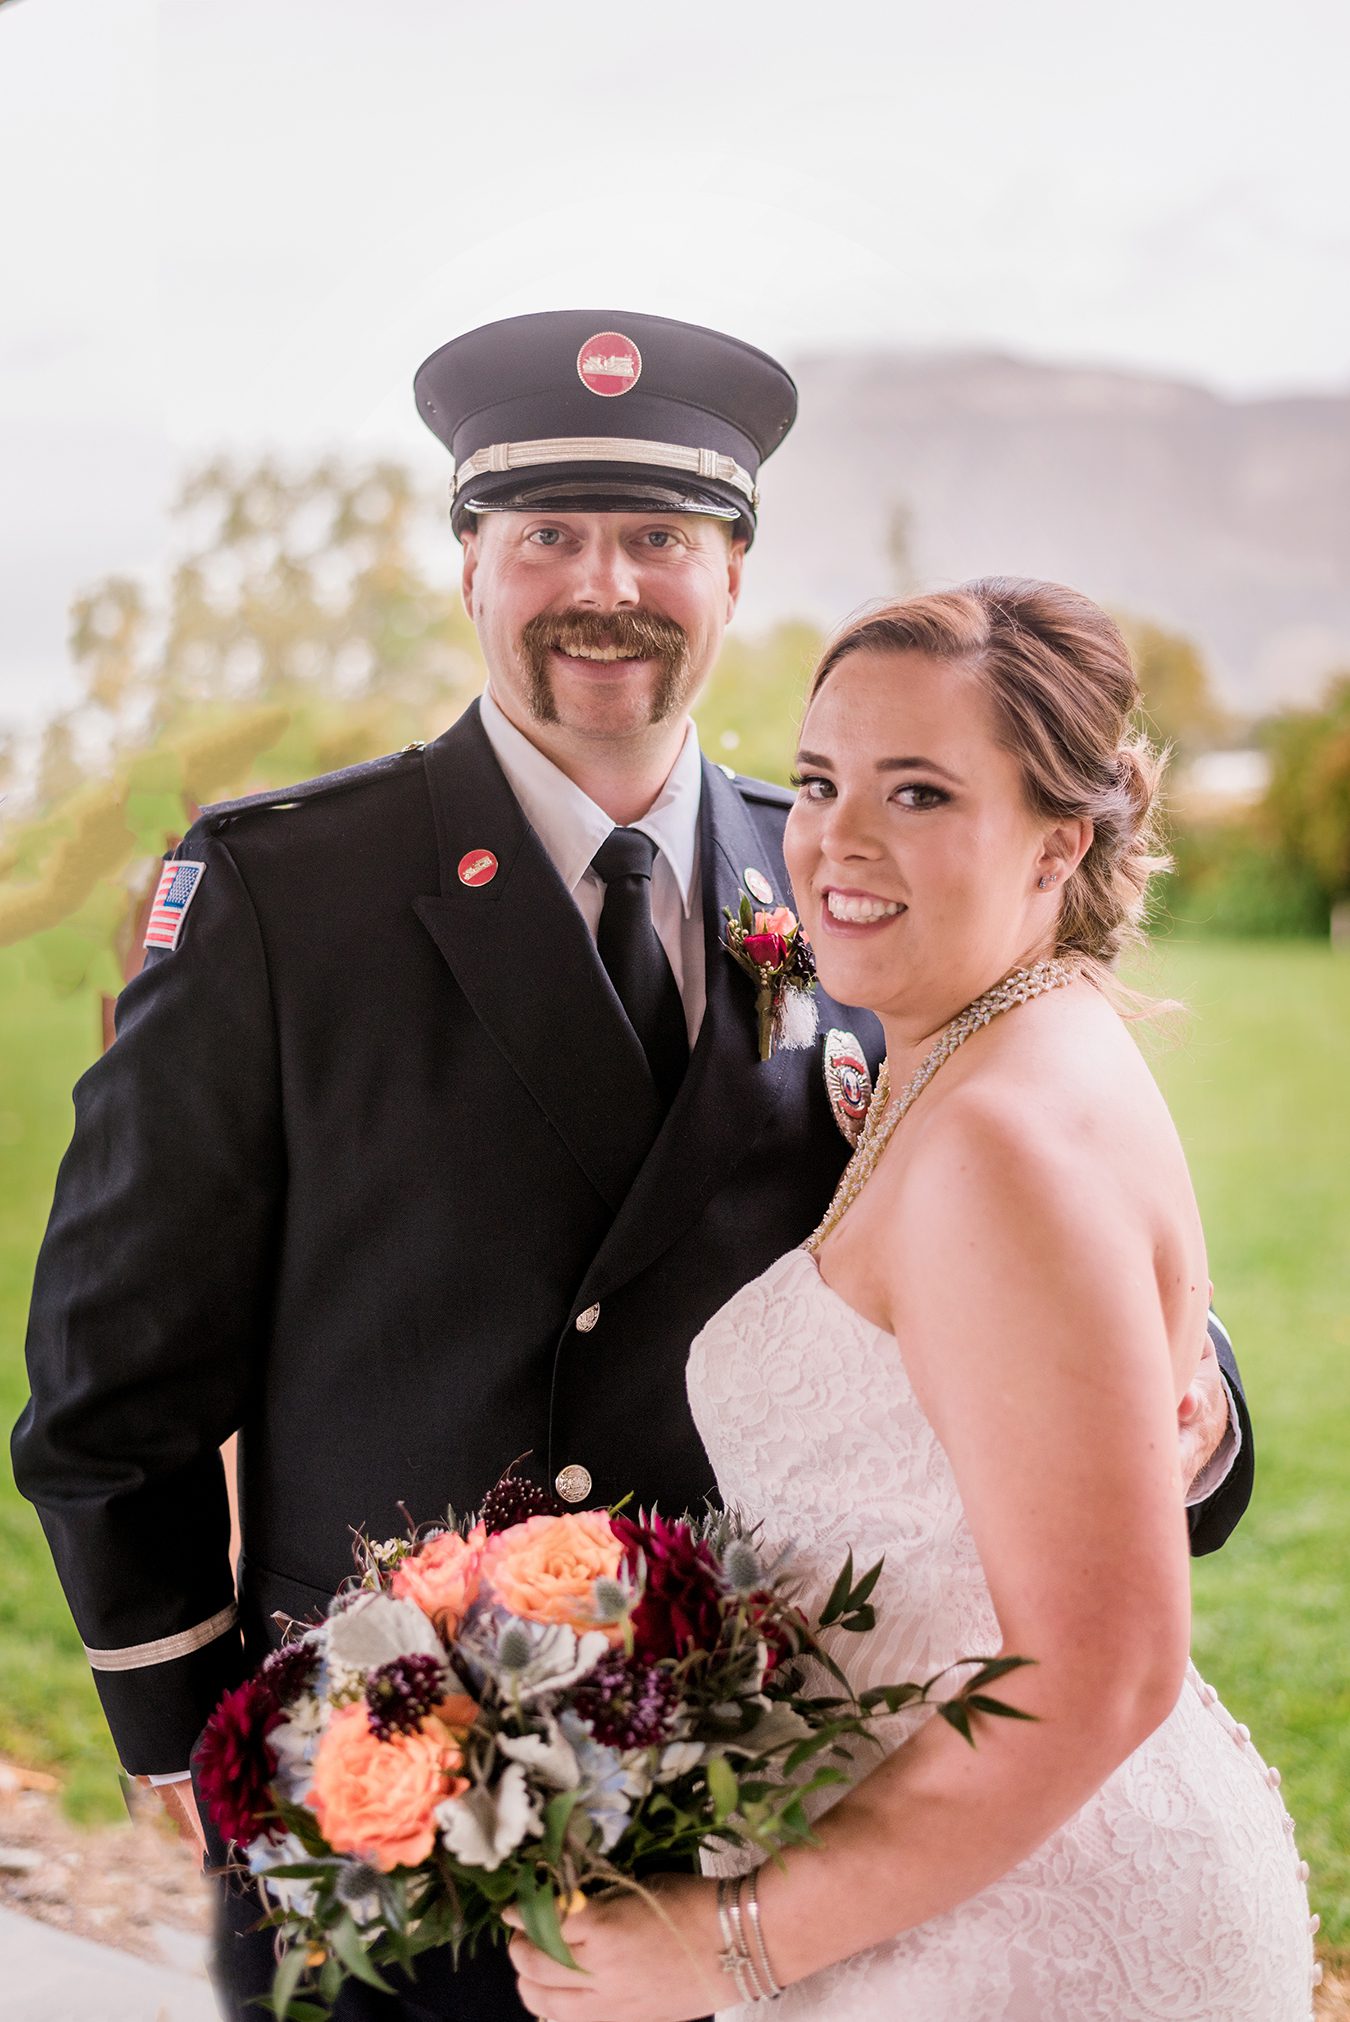 Aneill & Jason's Palisade River Ranch Firefighter Wedding | amanda.matilda.photography